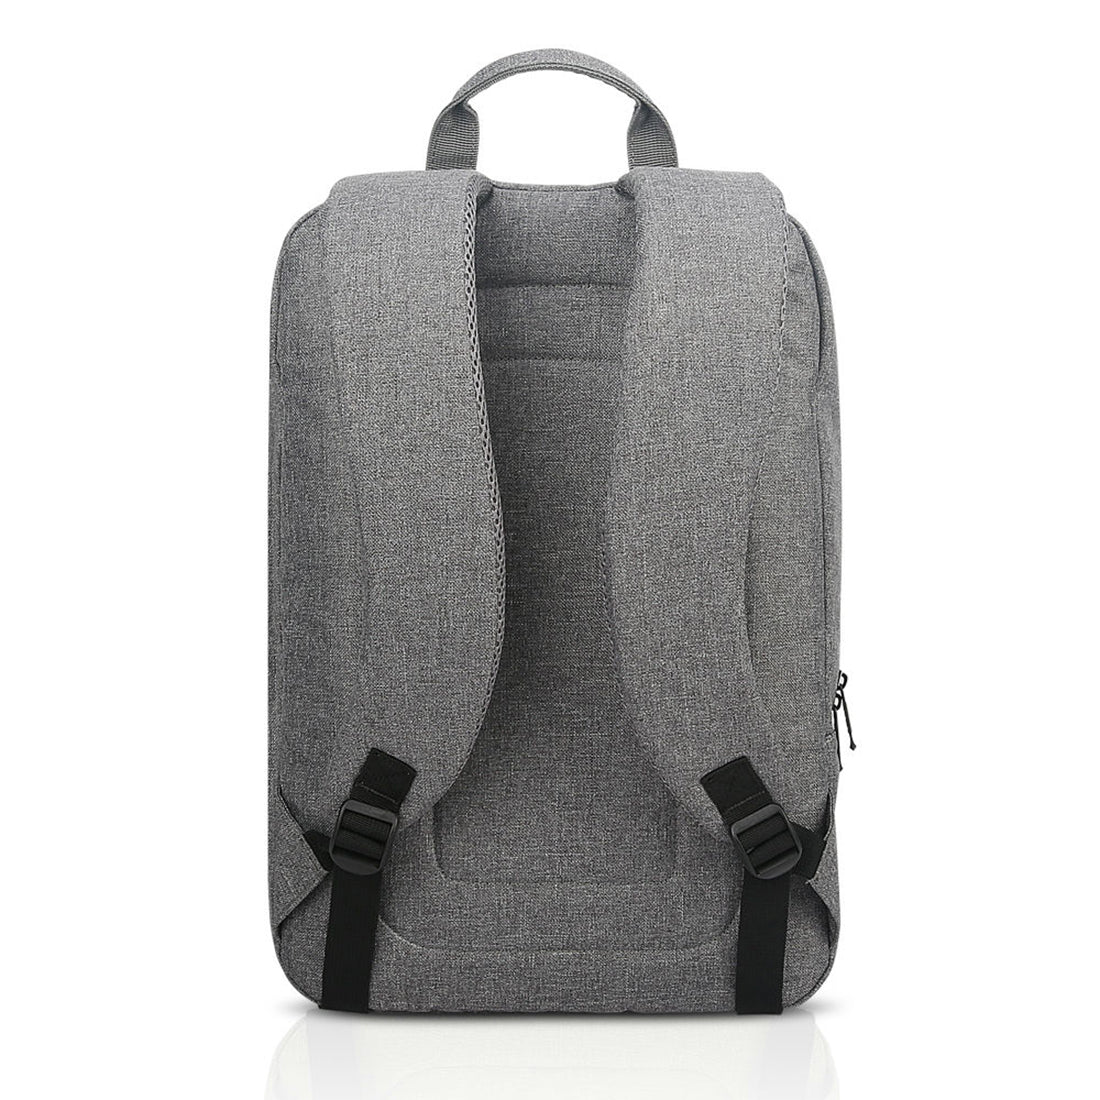 Lenovo Casual Backpack B210 for 15.6-inch Laptops